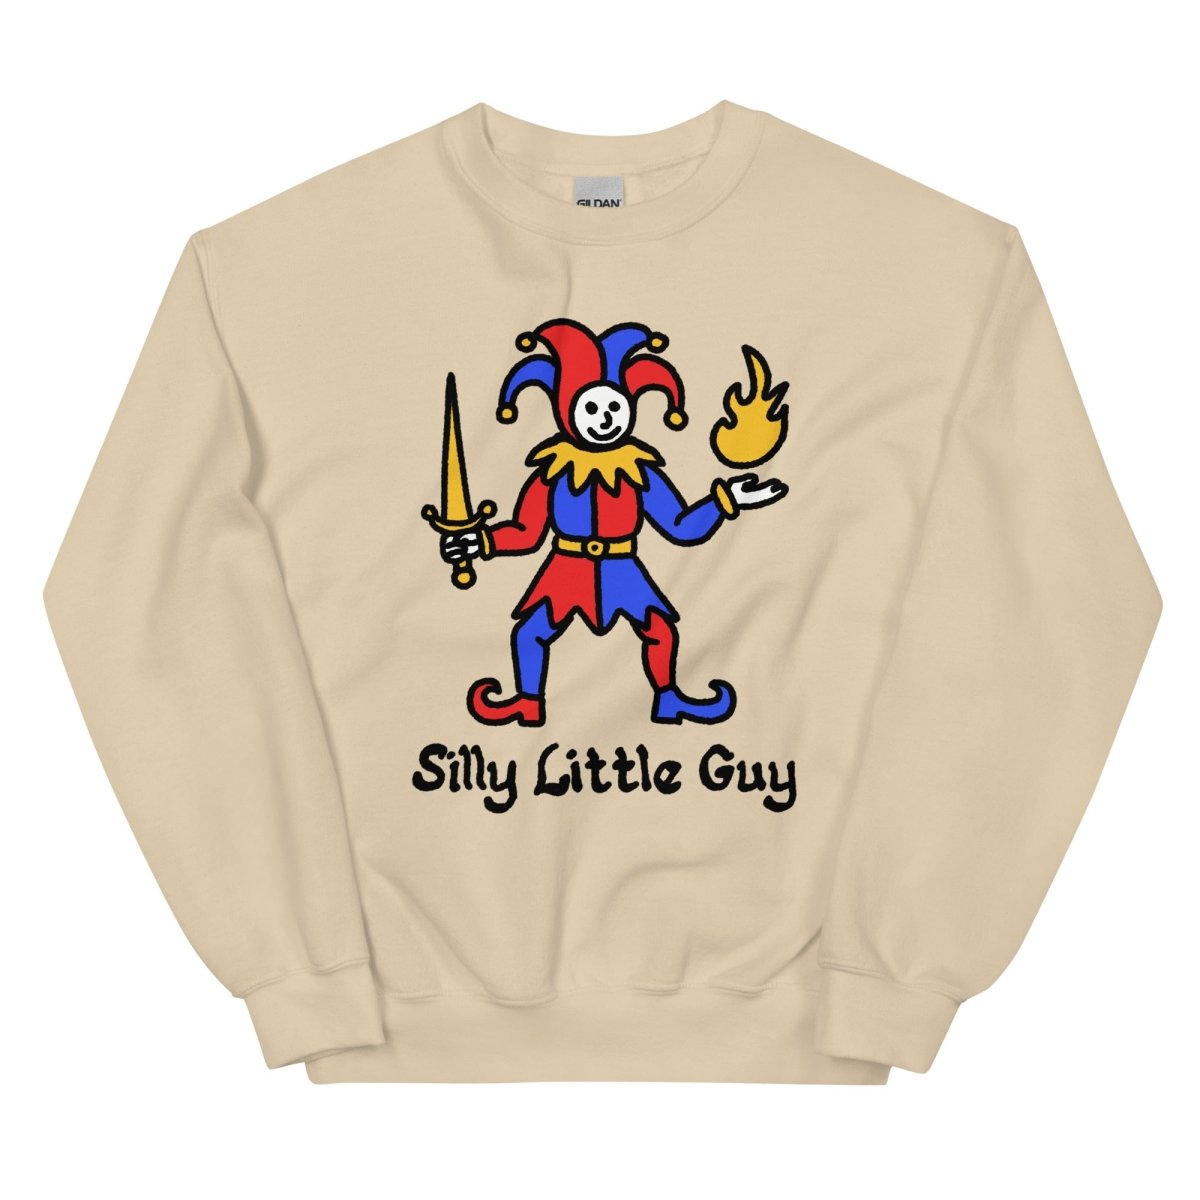 Silly little guy sweatshirt - Pretty Bad Co.